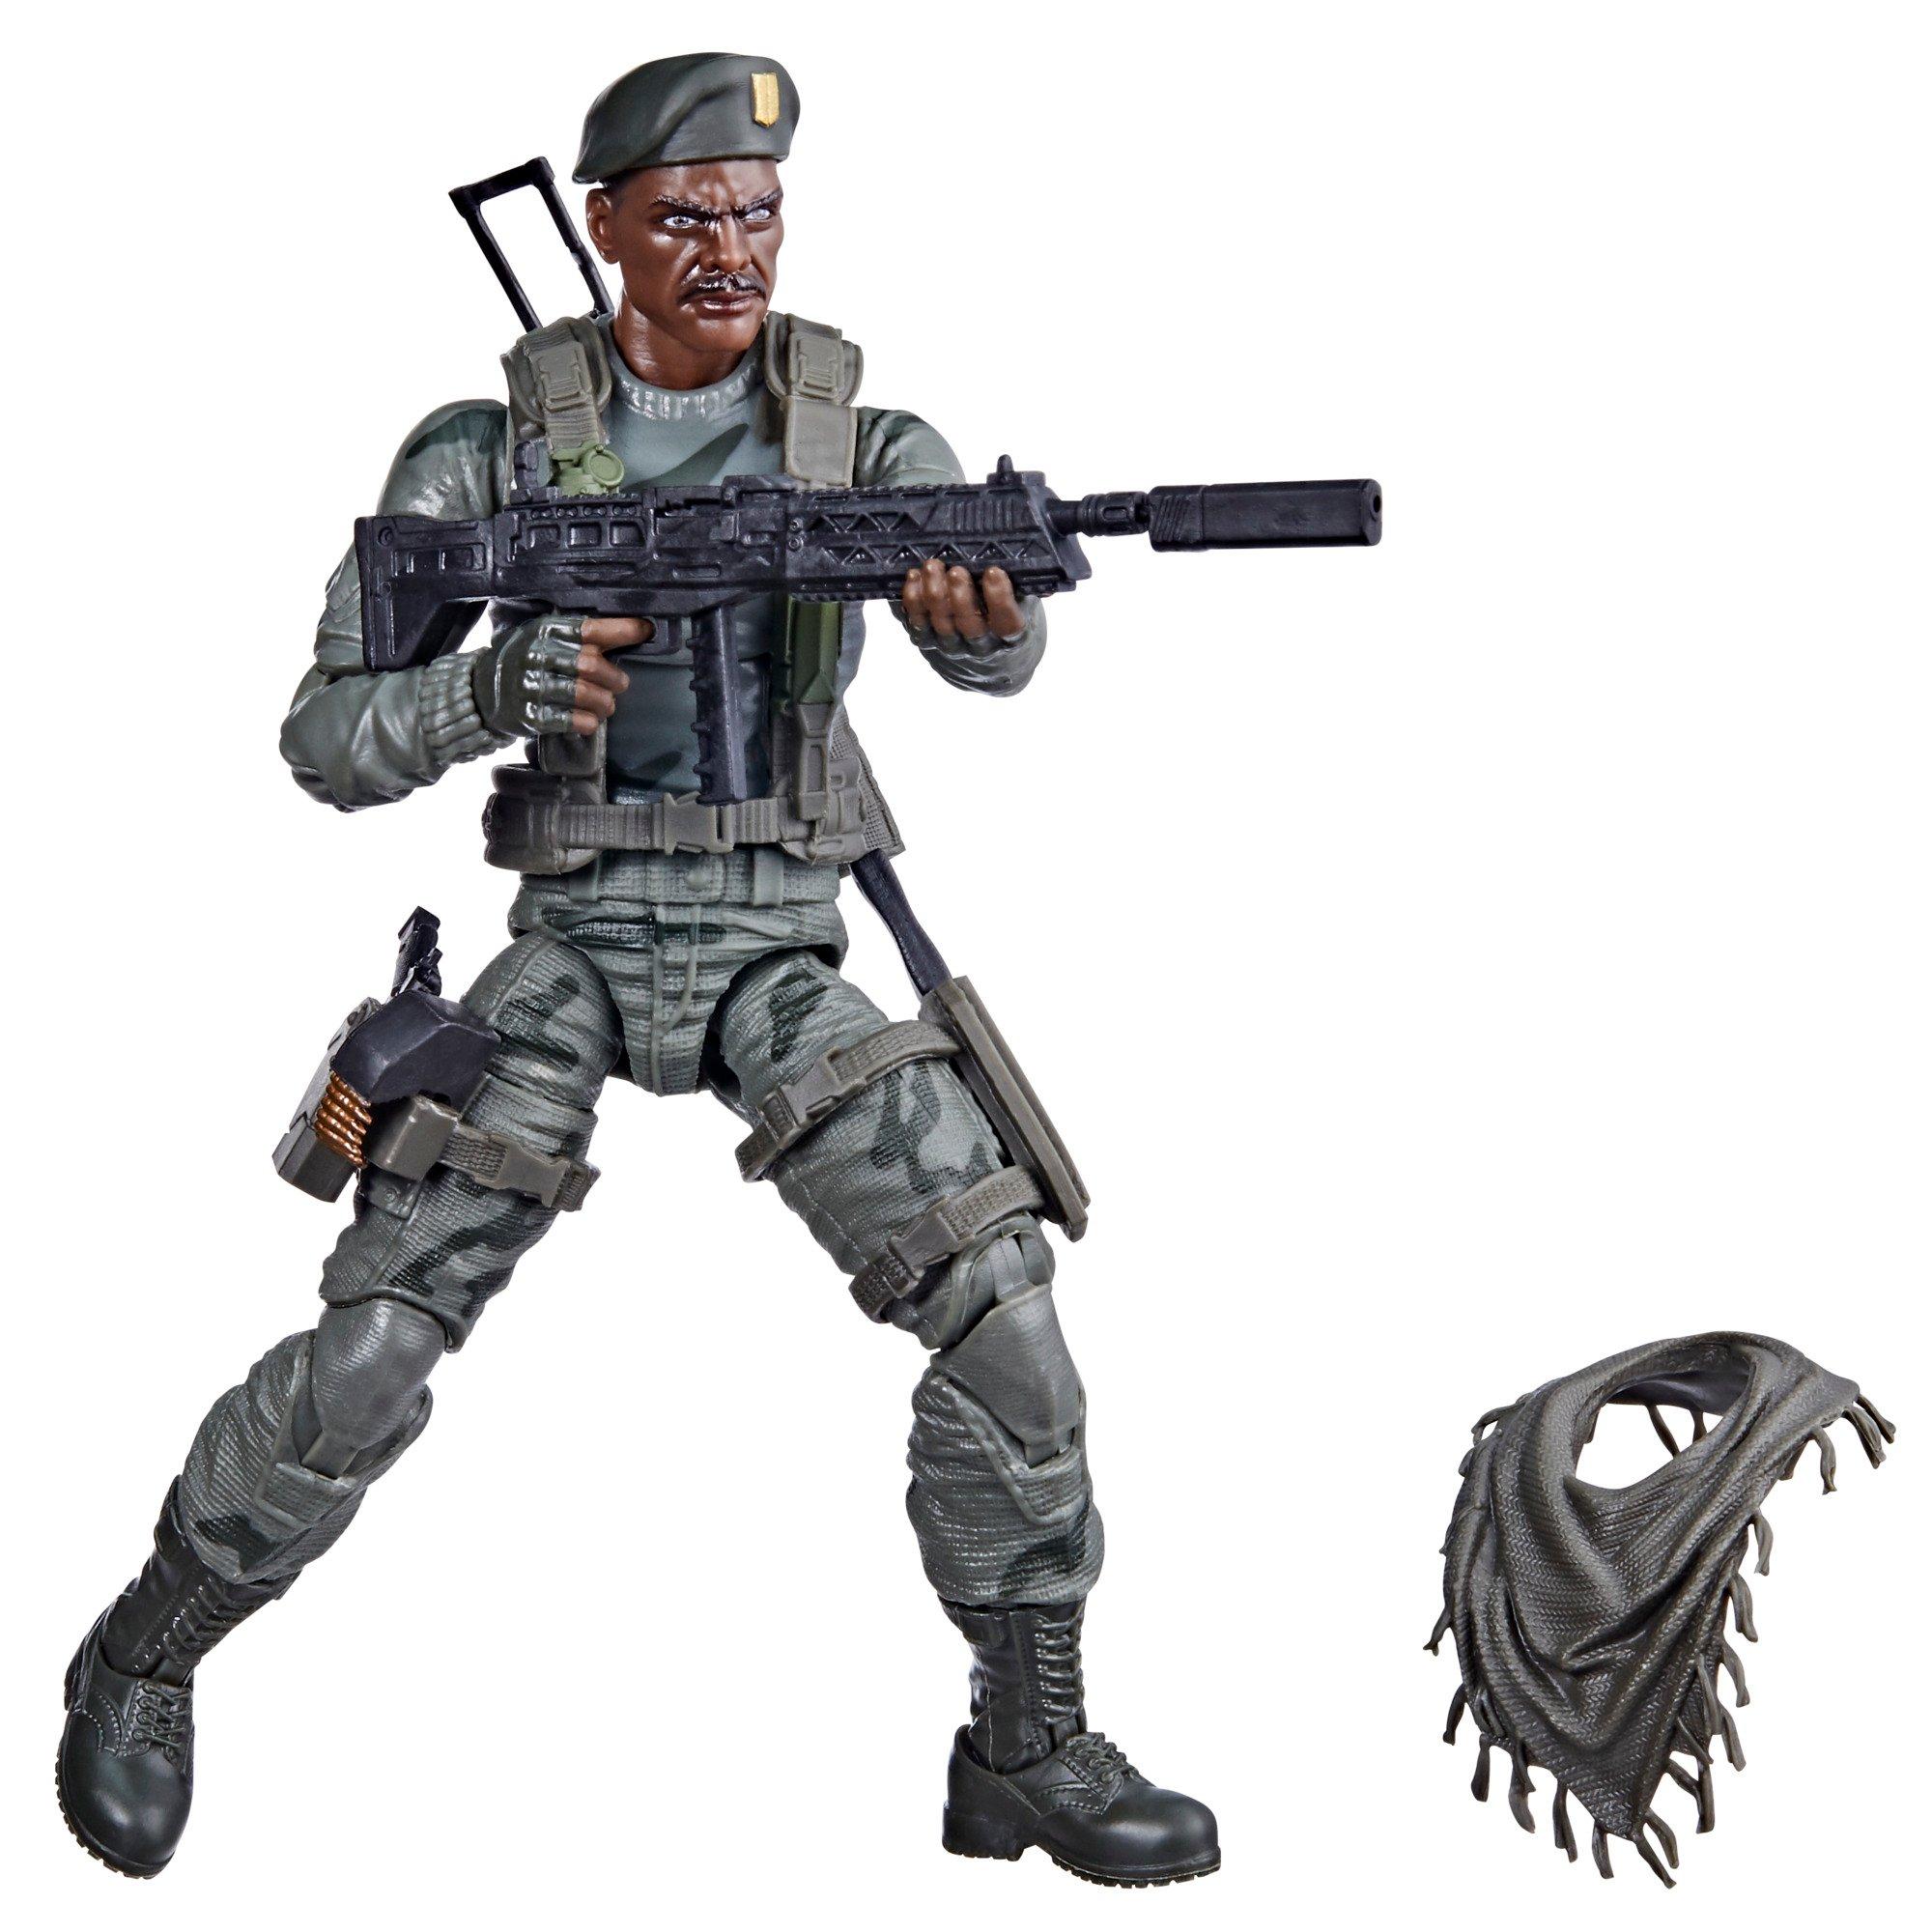 Joe U.S Hasbro G.I Army Infantry Action Figure for sale online